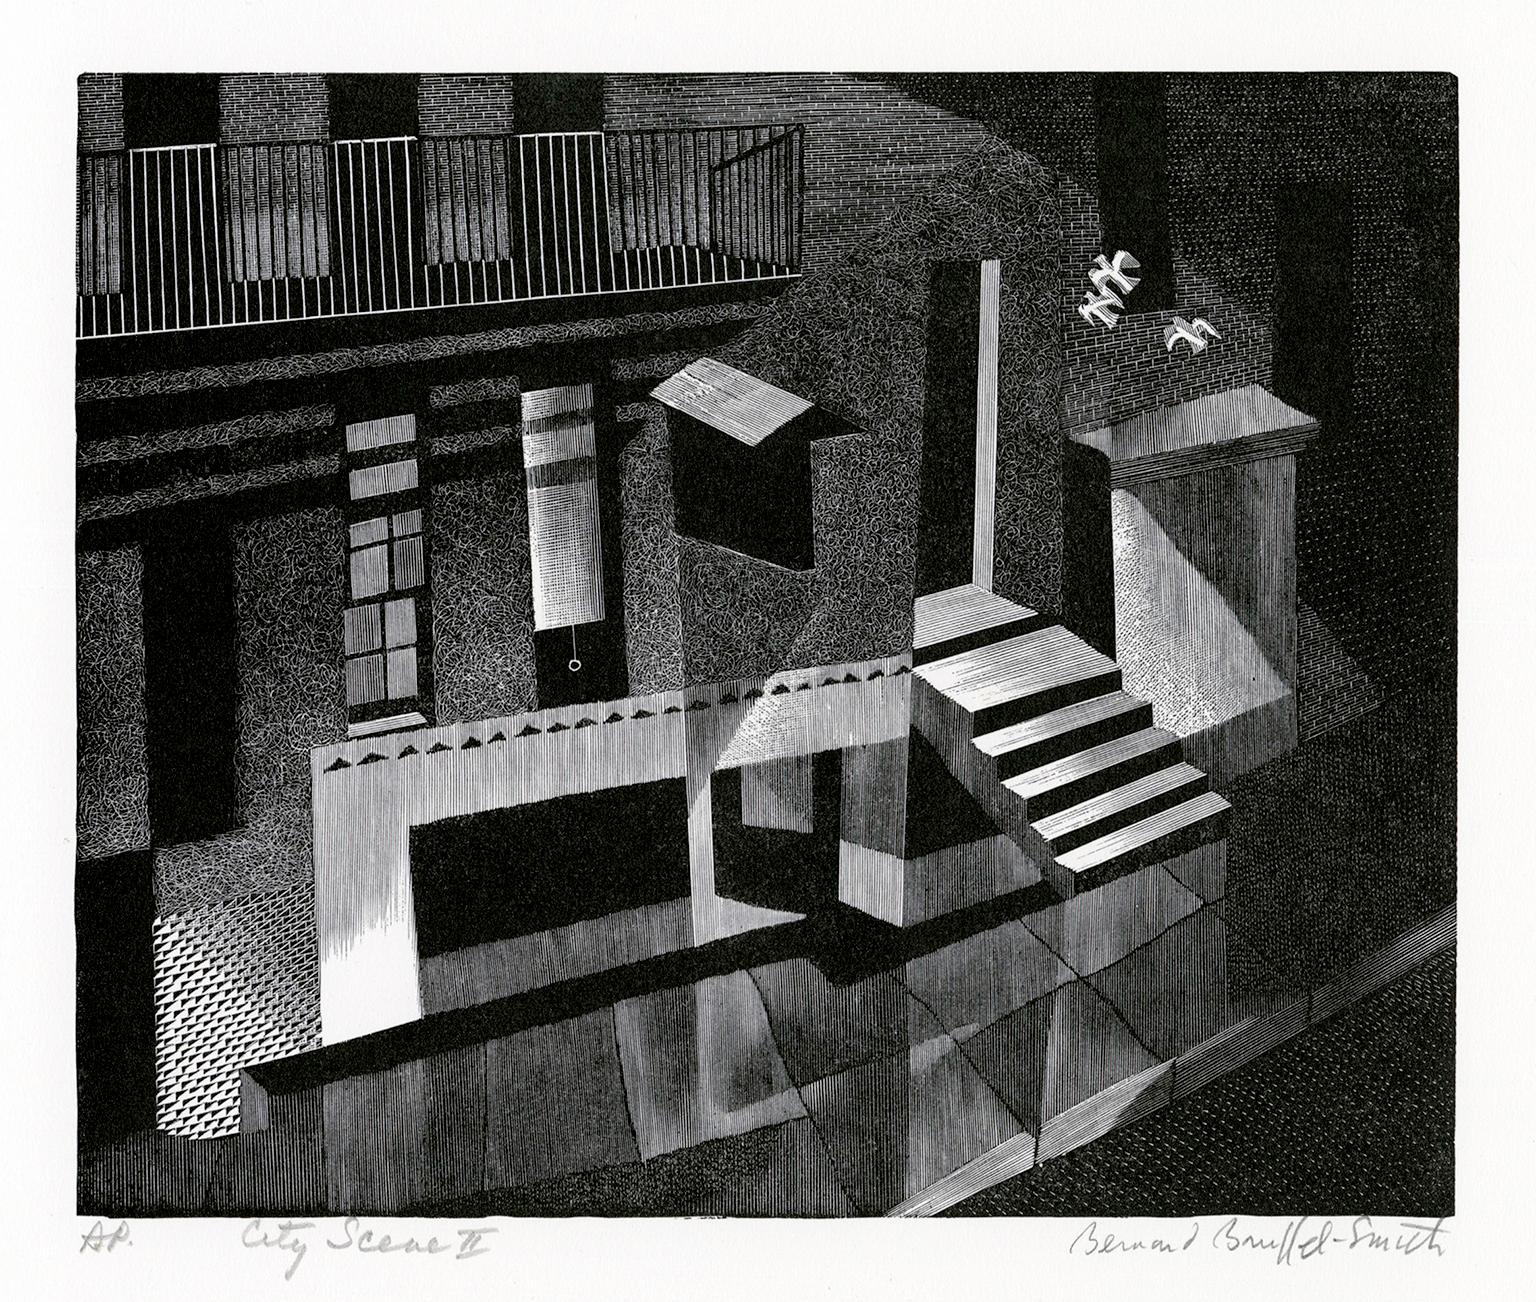 Figurative Print Bernard Brussel-Smith - Scène de ville II   Moderne du milieu du siècle dernier